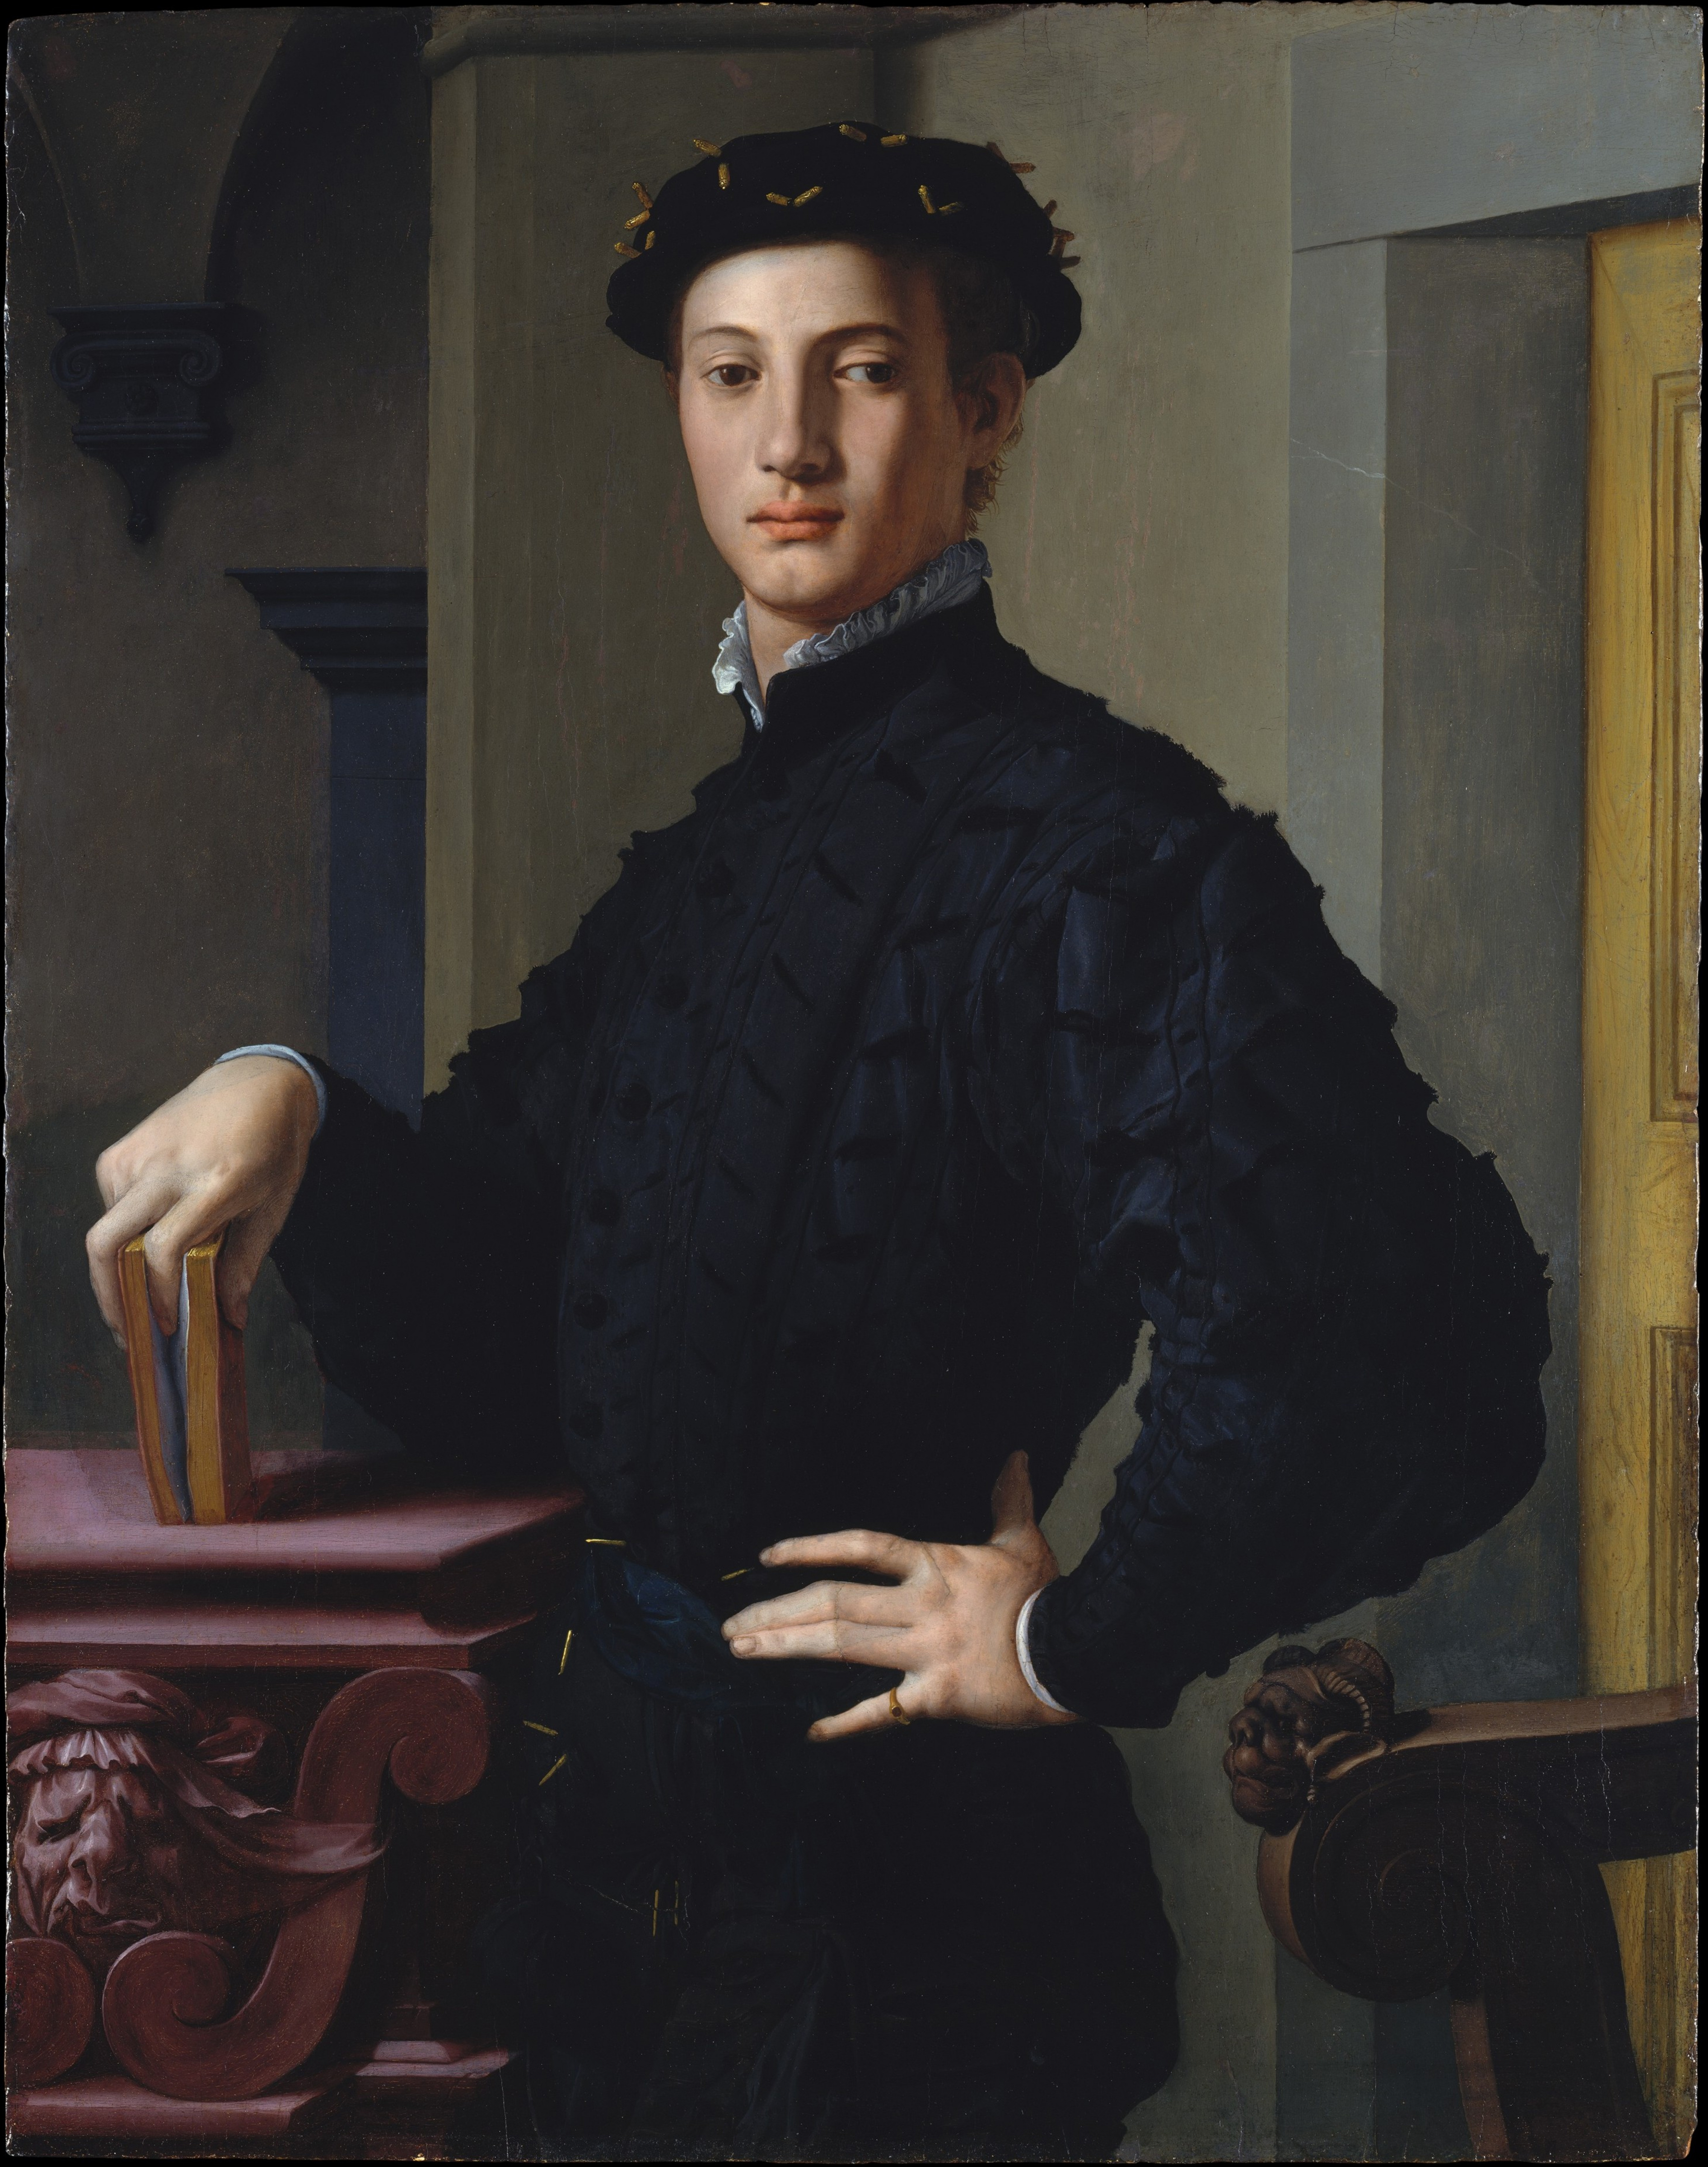 Agnolo Bronzino - November 17, 1503 - November 23, 1572